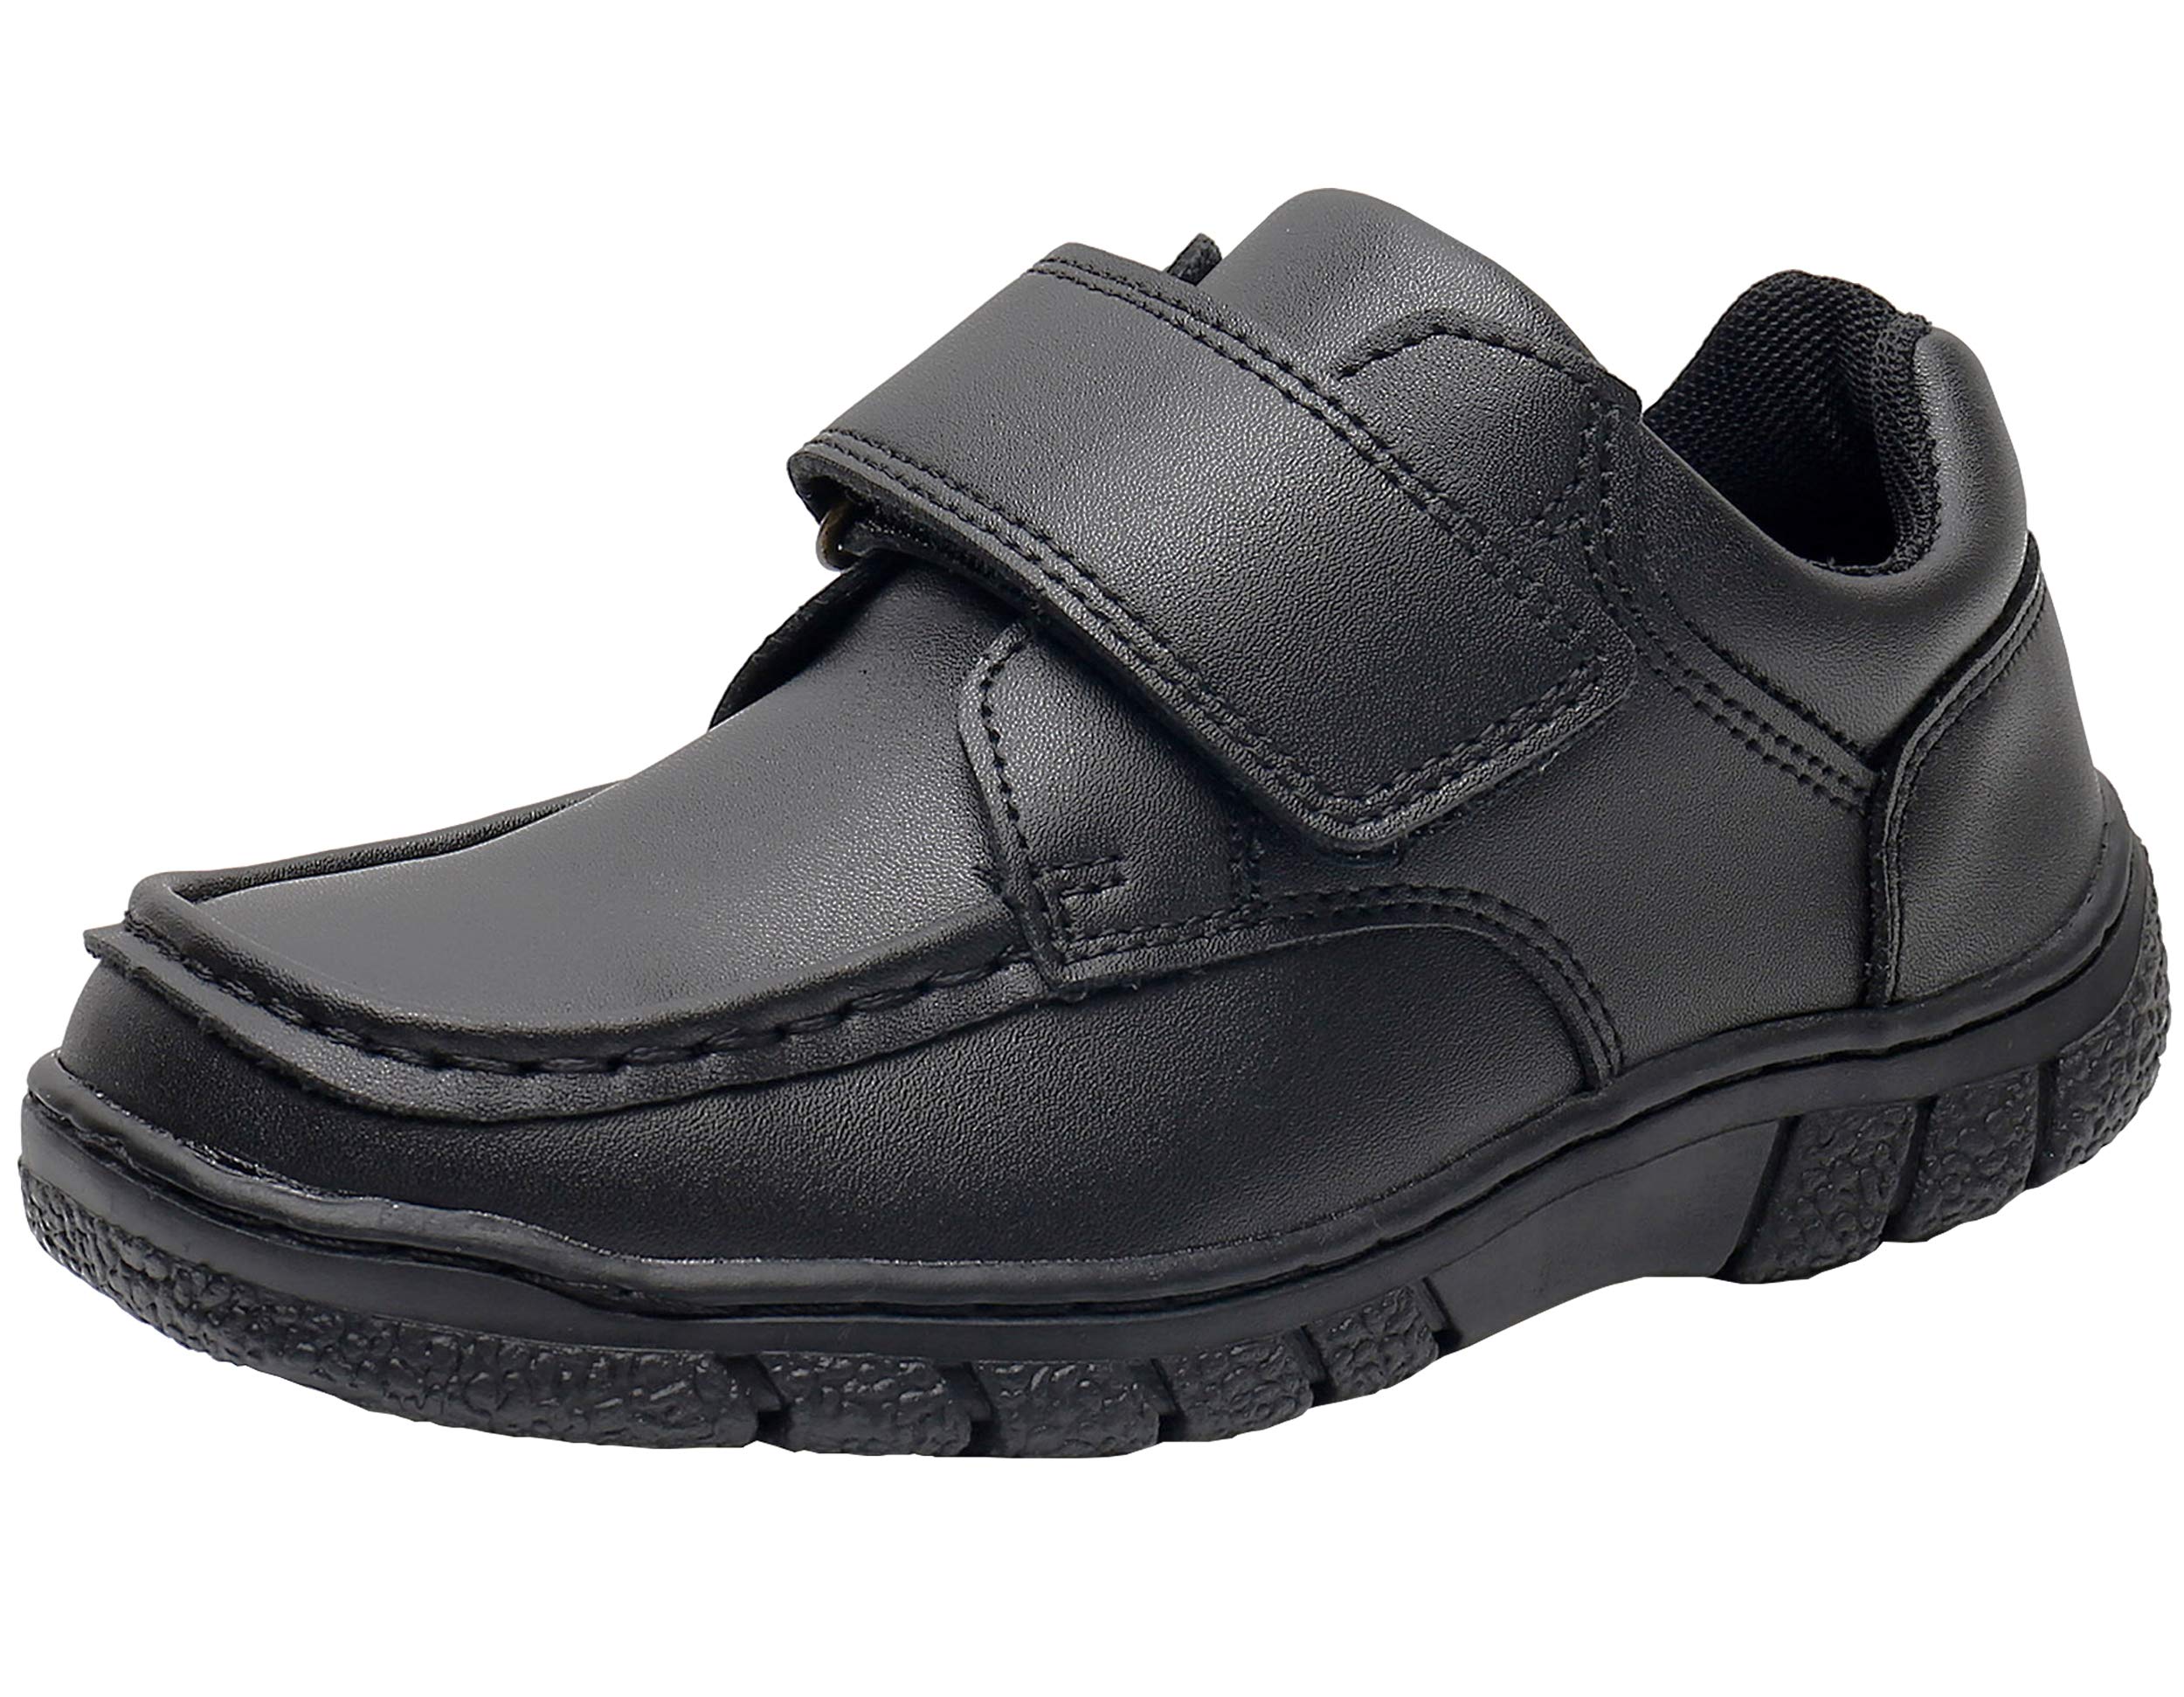 Ahannie Boys Soft School Uniform Shoes, Kids Comfort Oxford Dress Shoe(Toddler/Little Kid/Big Kid)